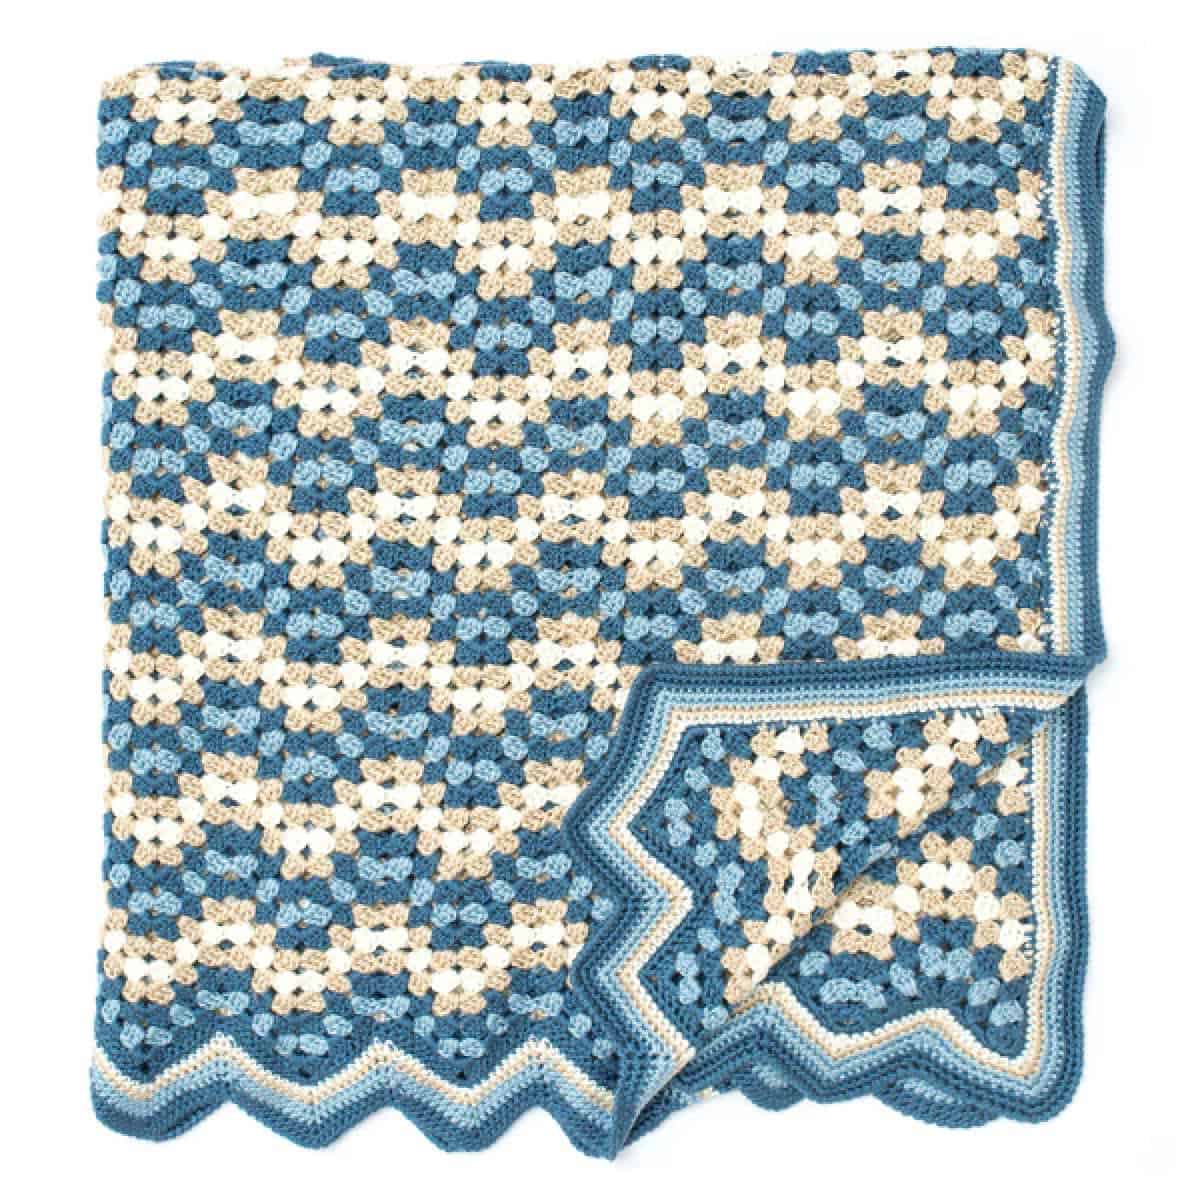 Granny Goes Ripple Crochet Blanket Pattern